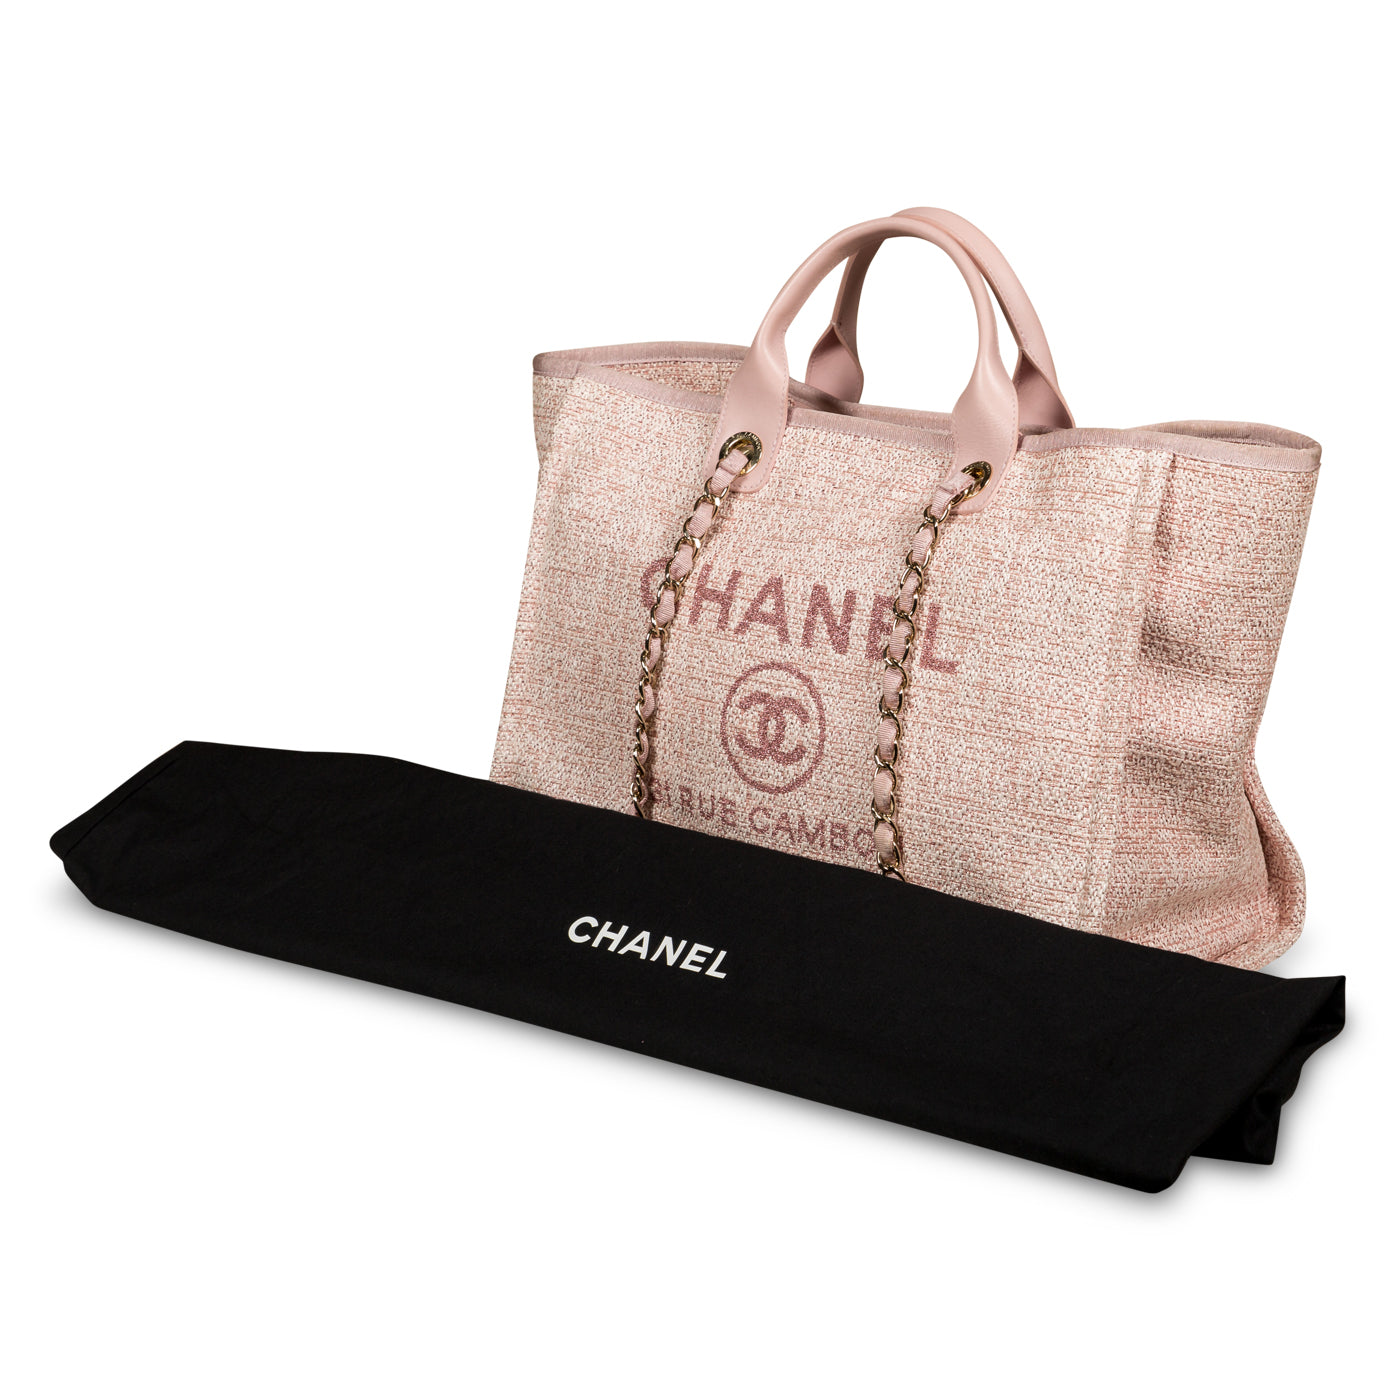 Chanel Deauville VS GST Tote Bag Review / Comparison & OUTFITS 💃 